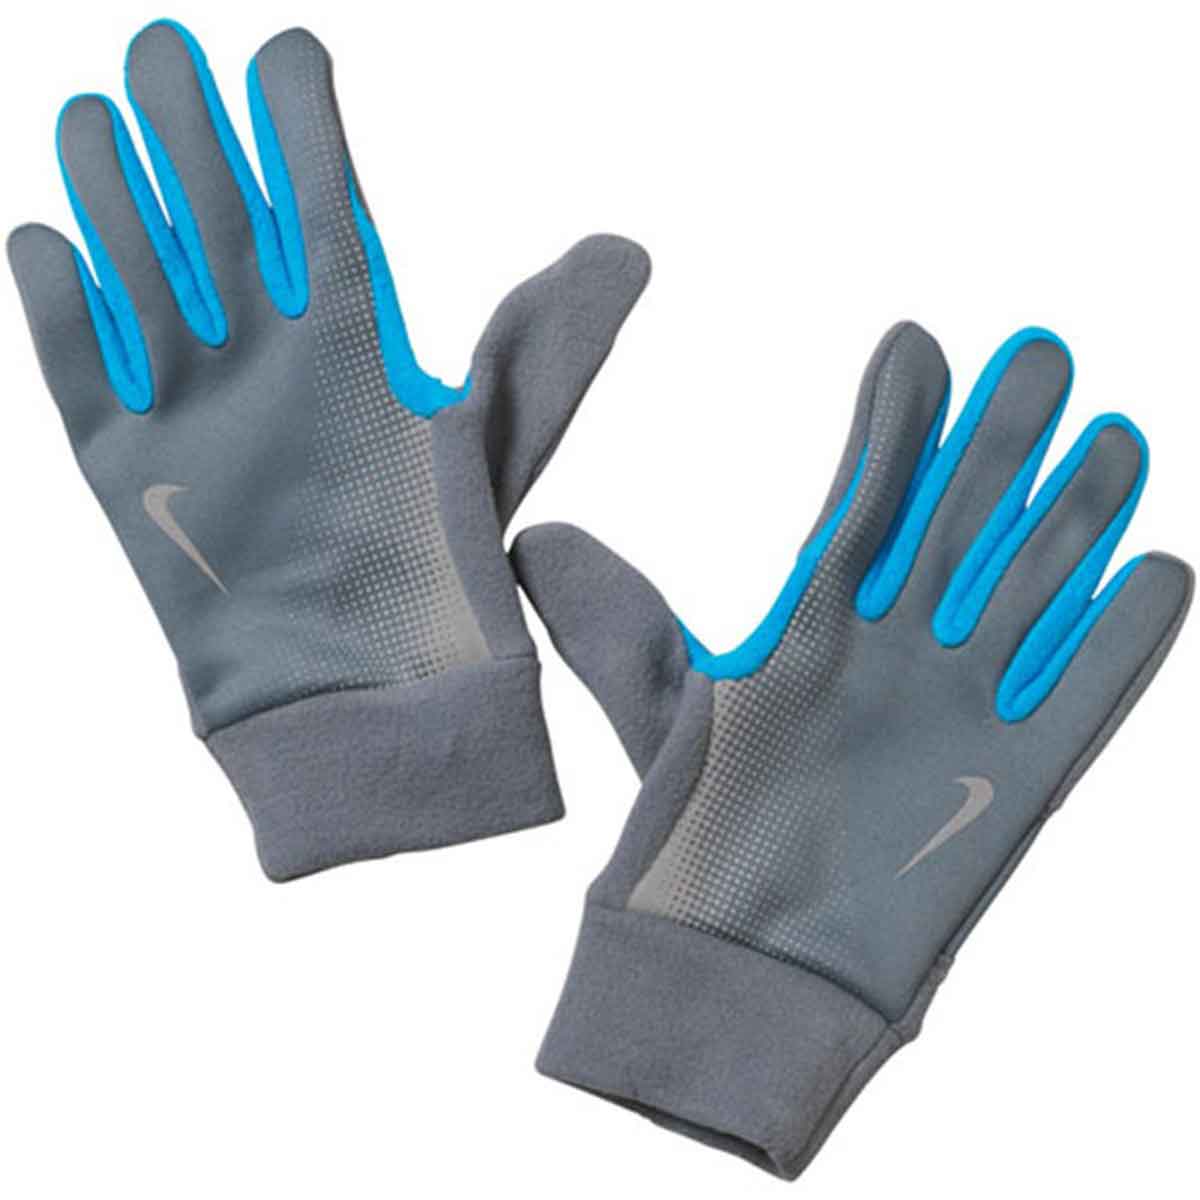 nike thermal gloves